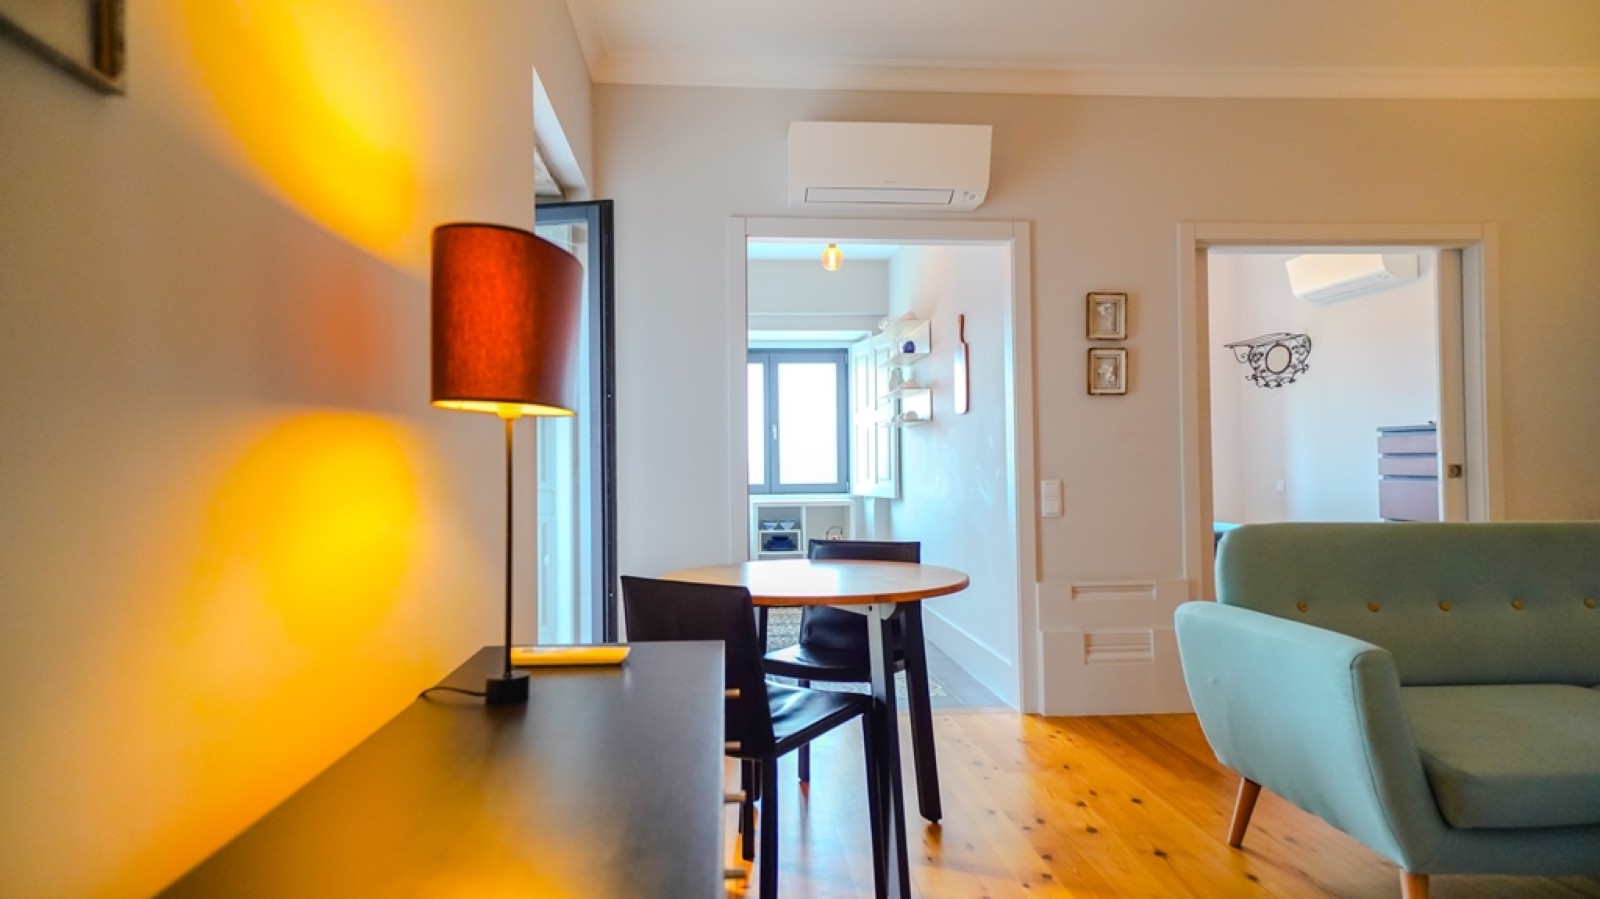 Appartement de 1 chambre avec balcon, à vendre, centre de Porto, Portugal_263798